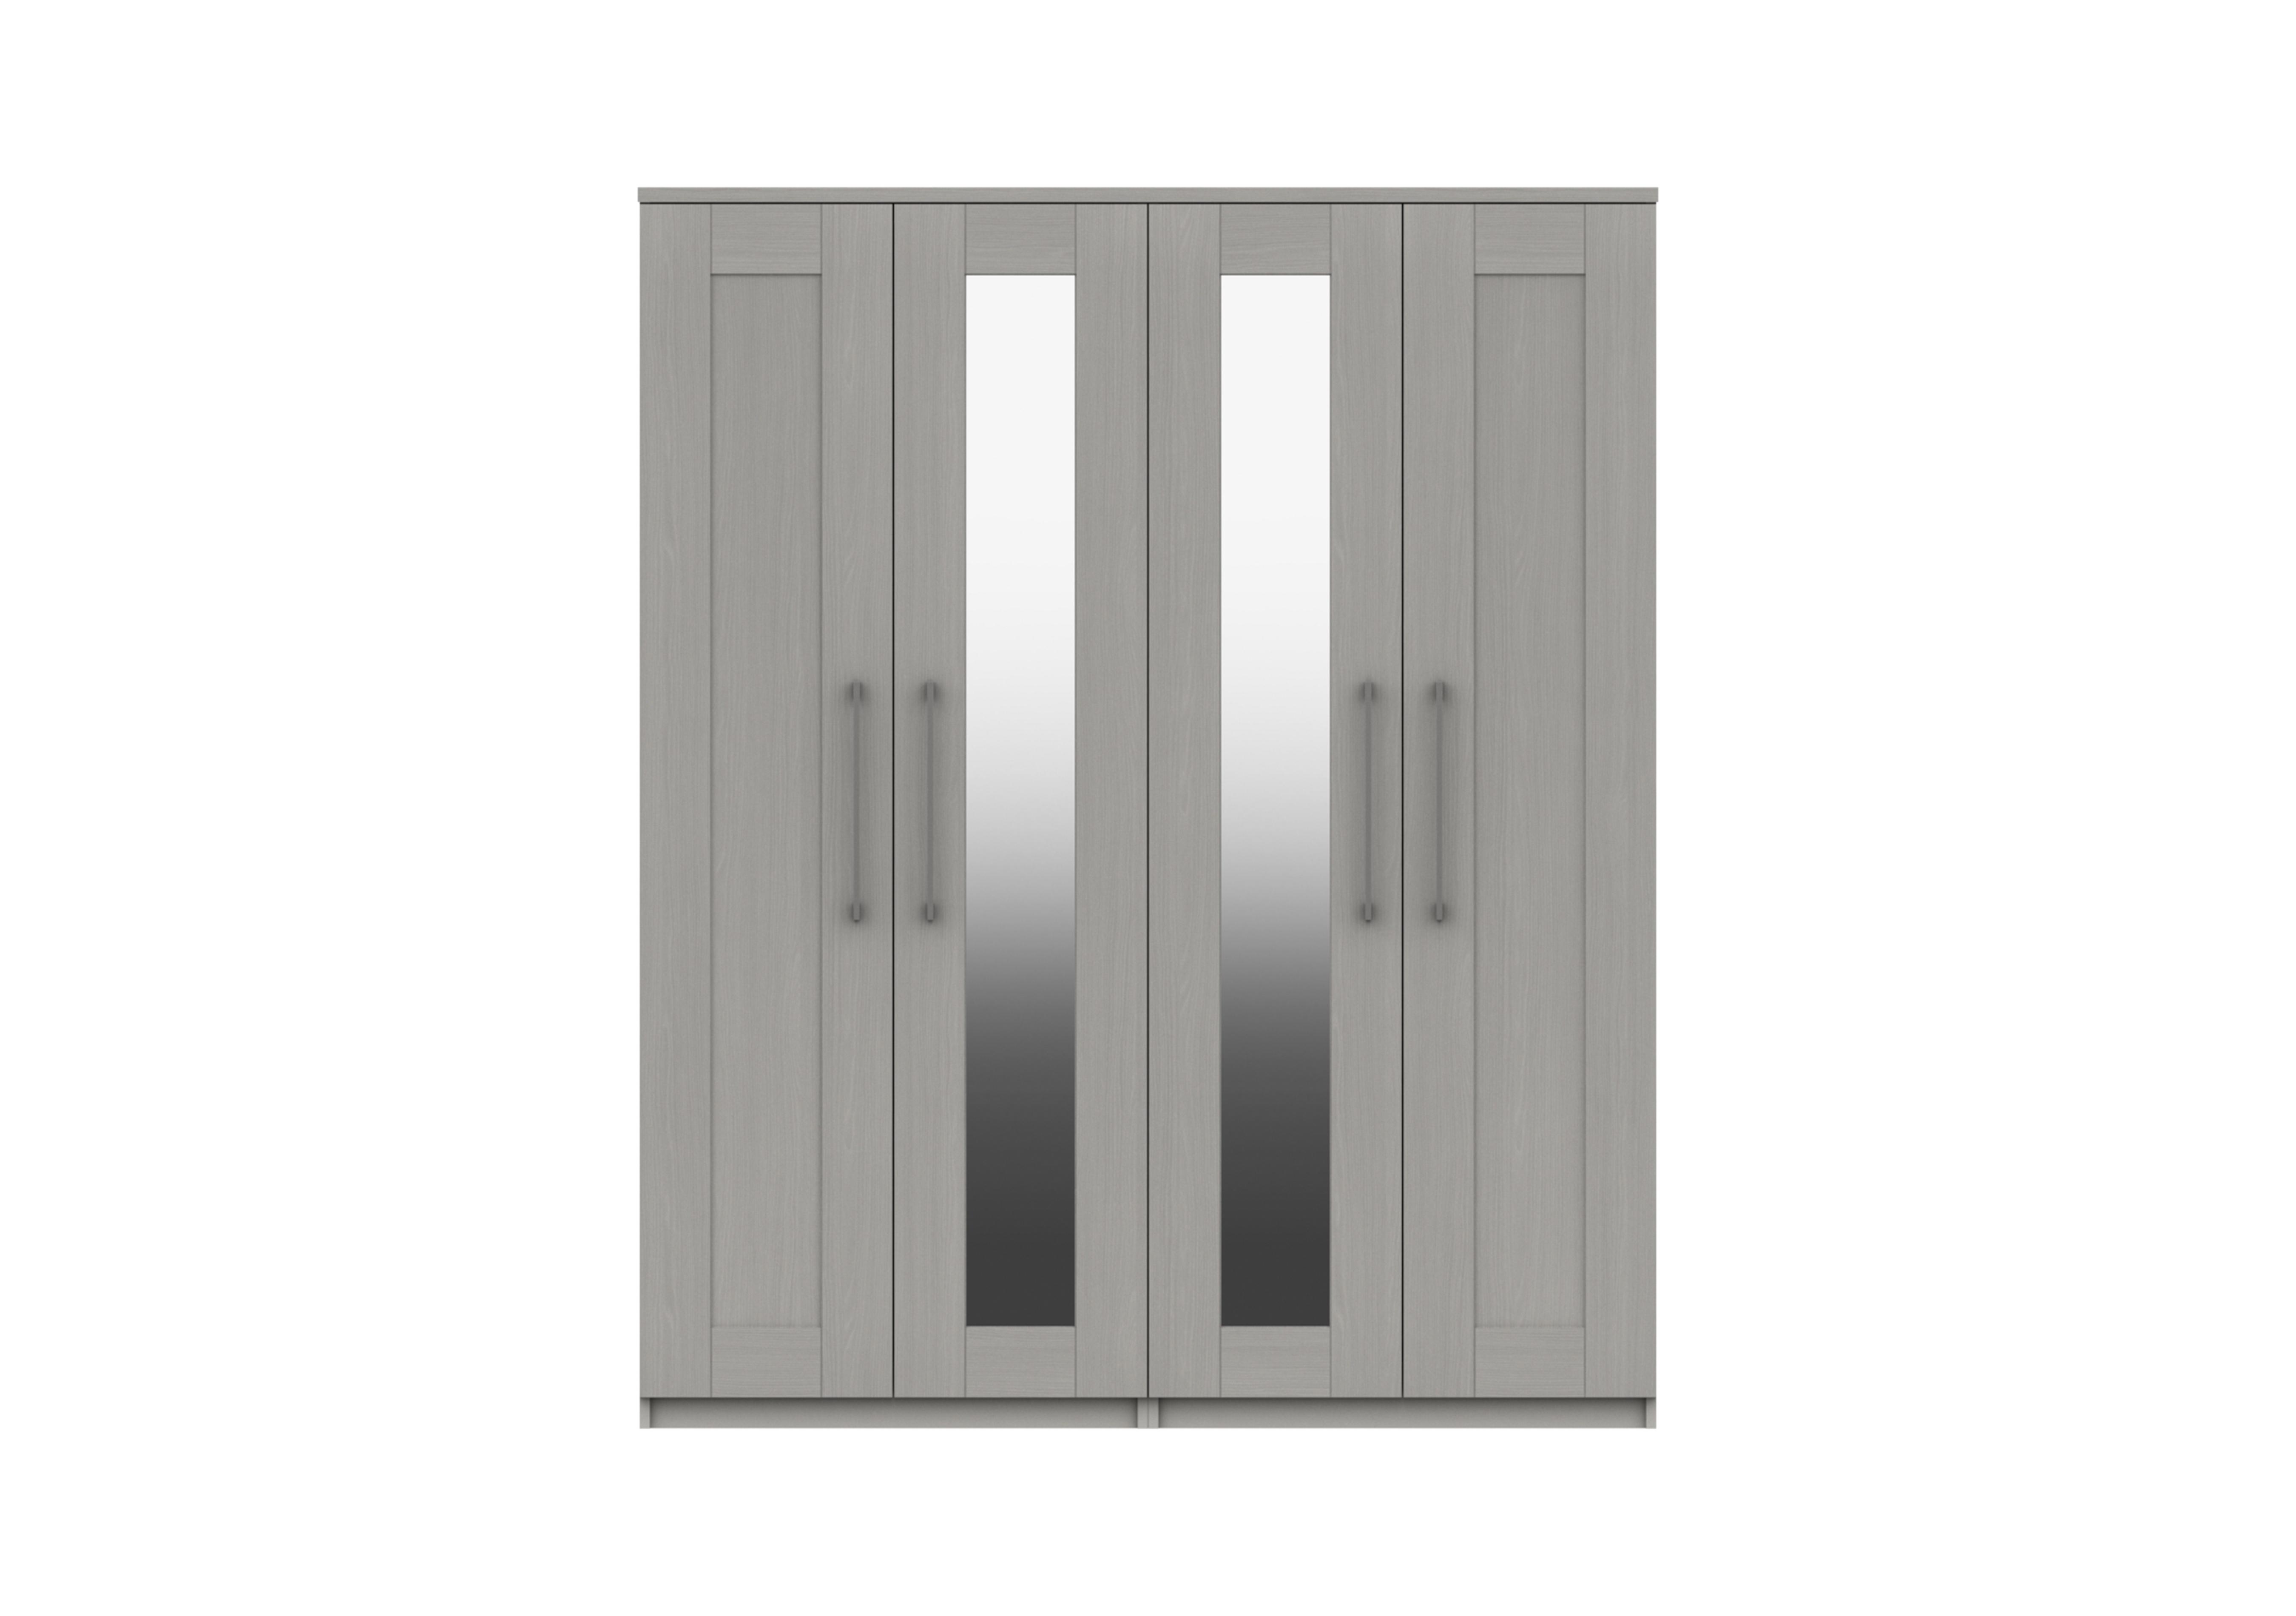 Fenchurch 4 Door Wardrobe with Mirrors in Light Grey on Furniture Village